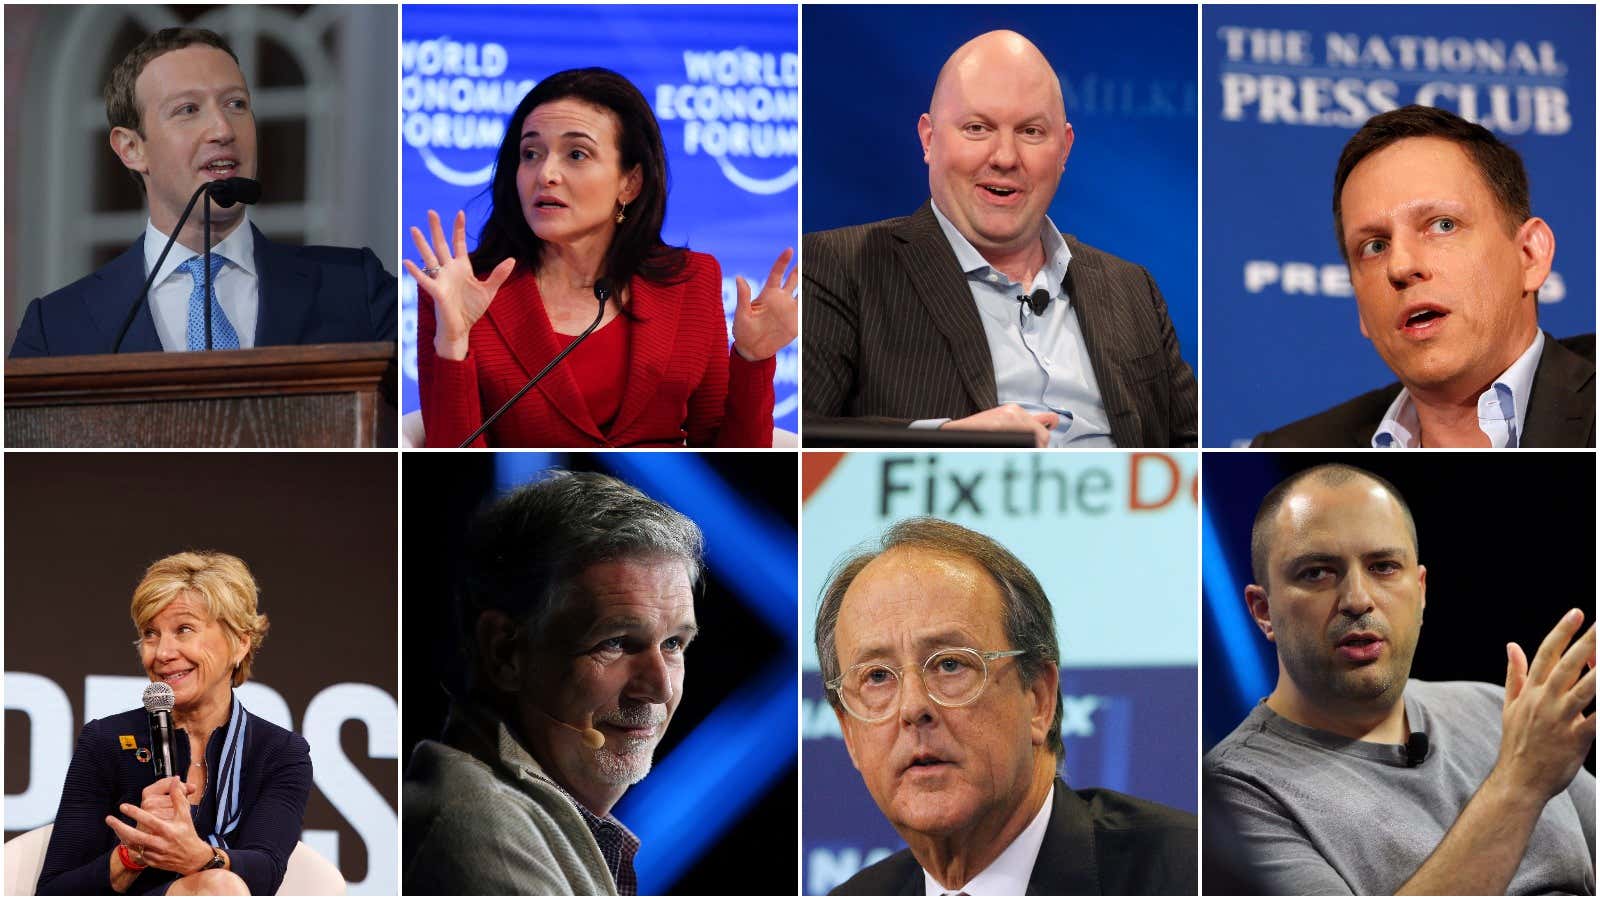 From top left: Zuckerberg, Sandberg, Andreessen, Thiel, Desmond-Hellman, Hastings, Bowles, Koum.